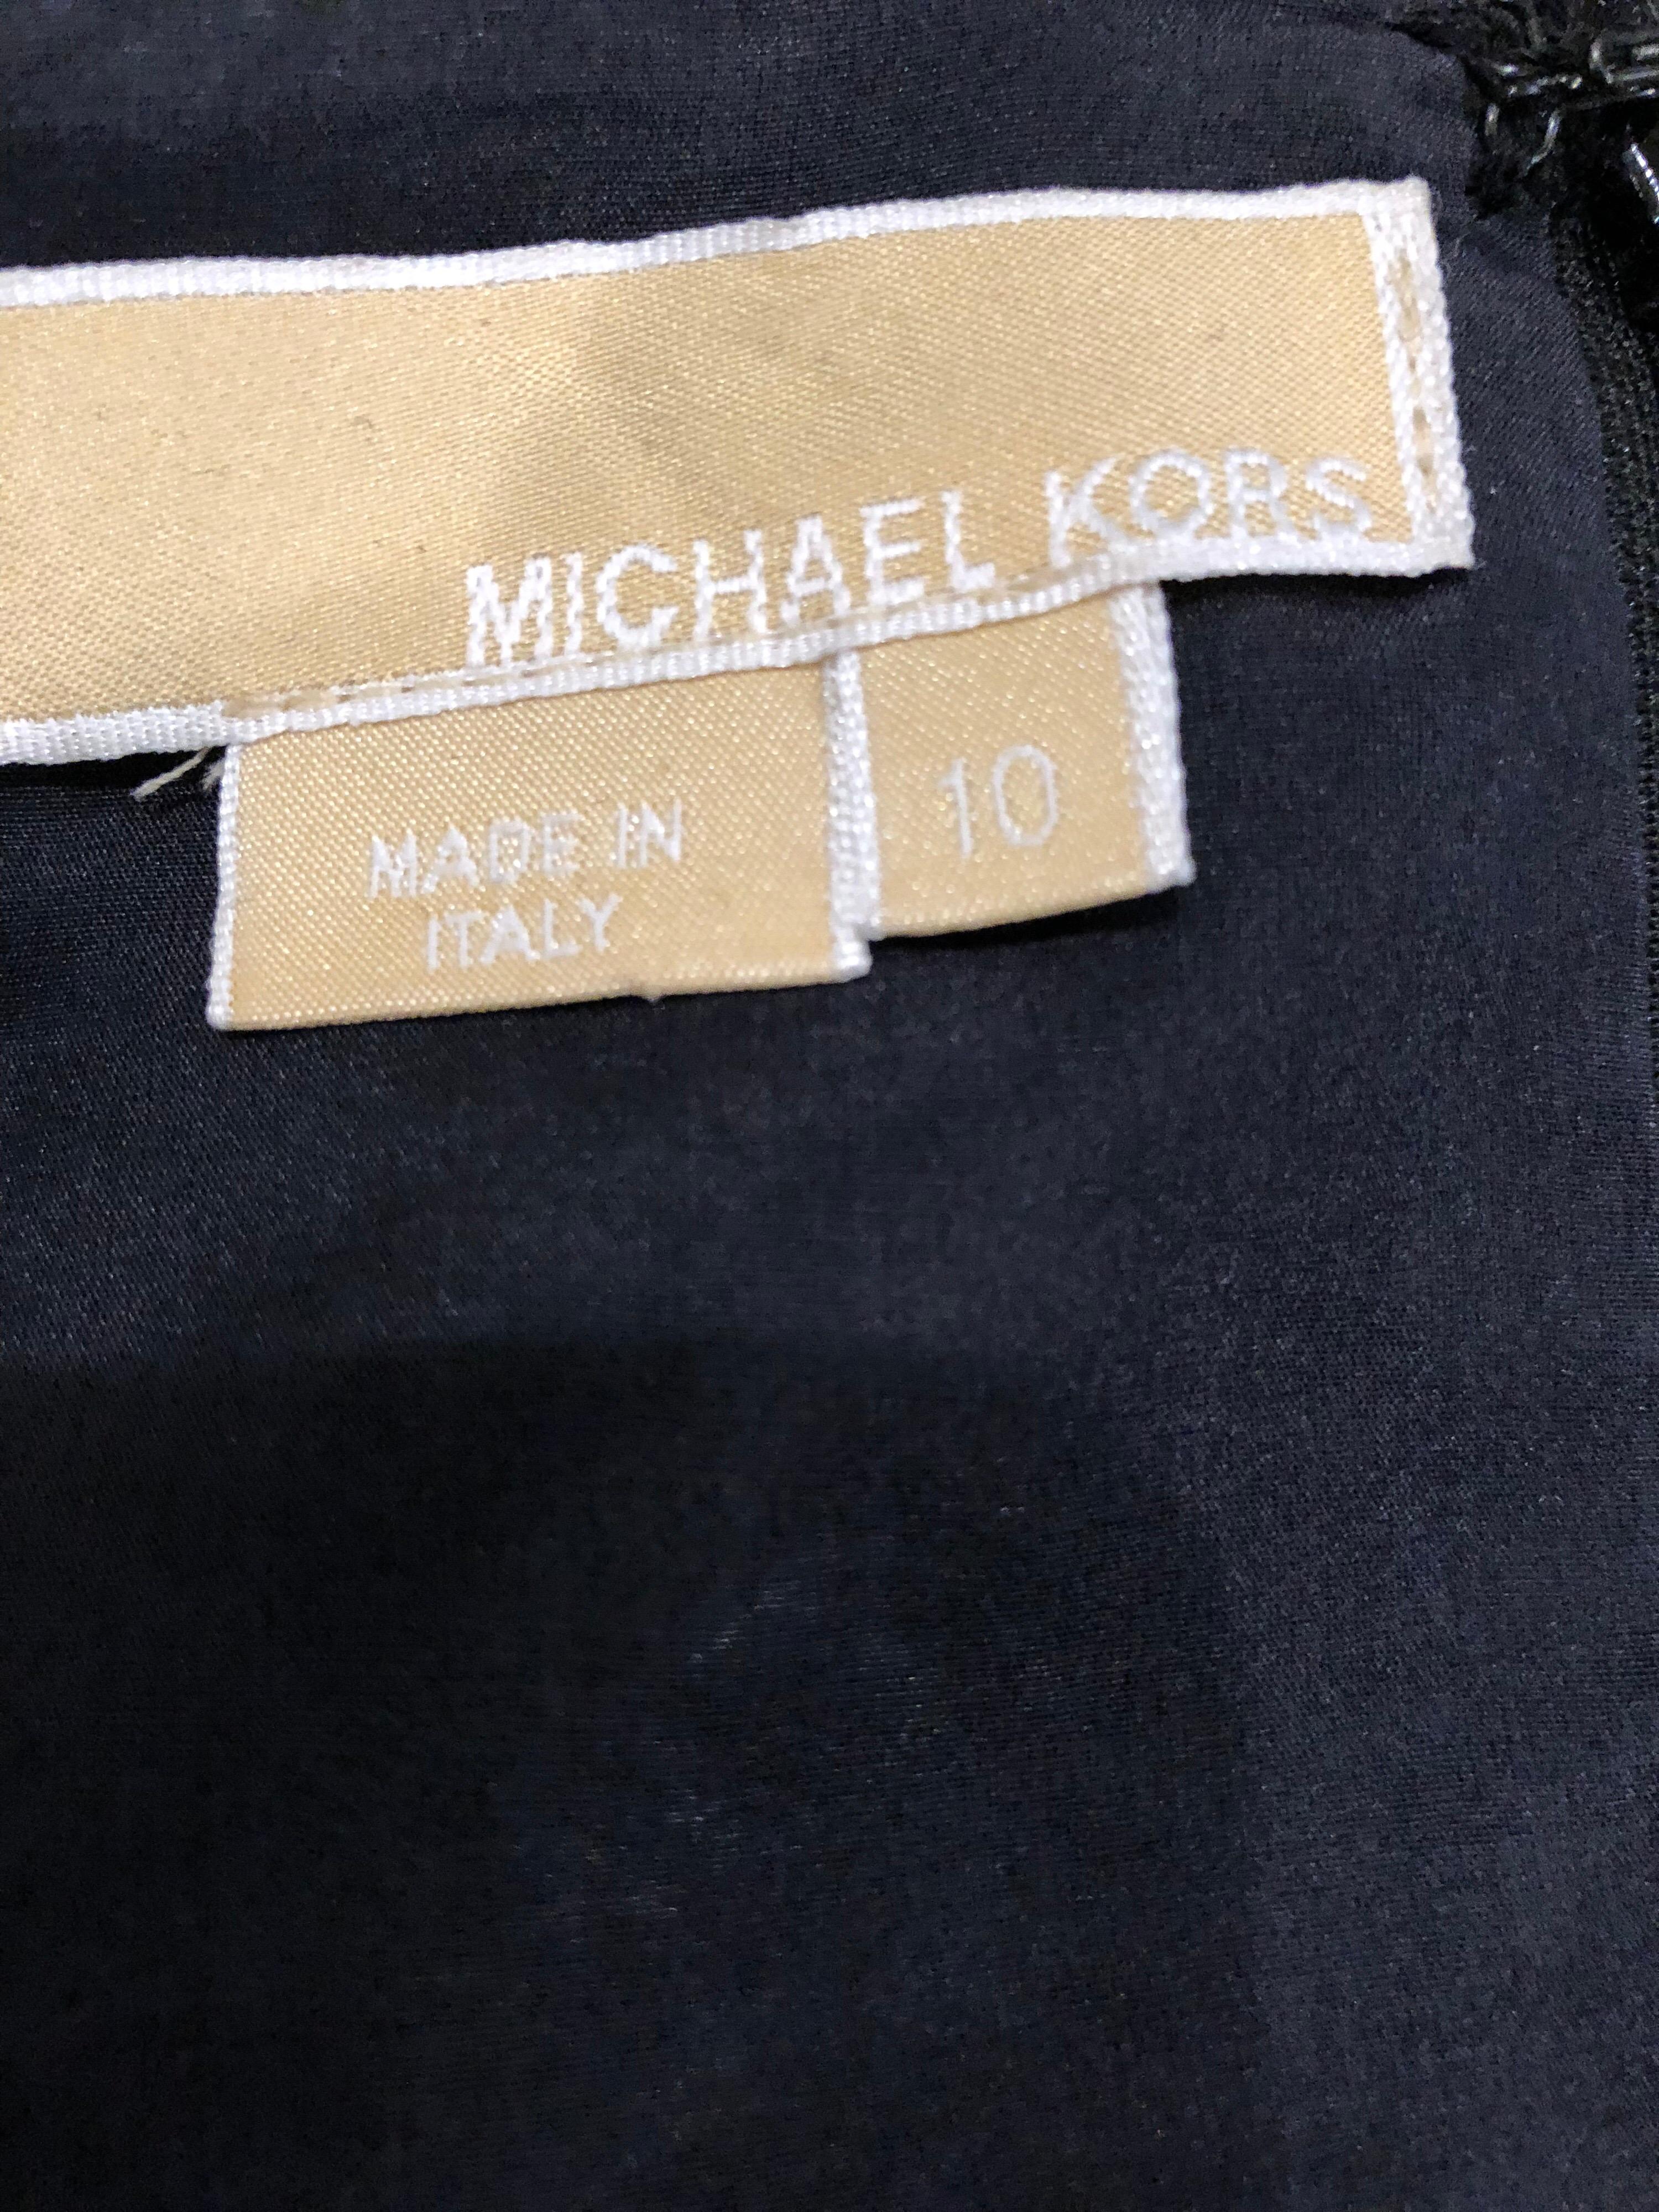 New Michael Kors Collection Size 10 Cotton Eyelet Little Black Sheath Dress For Sale 8